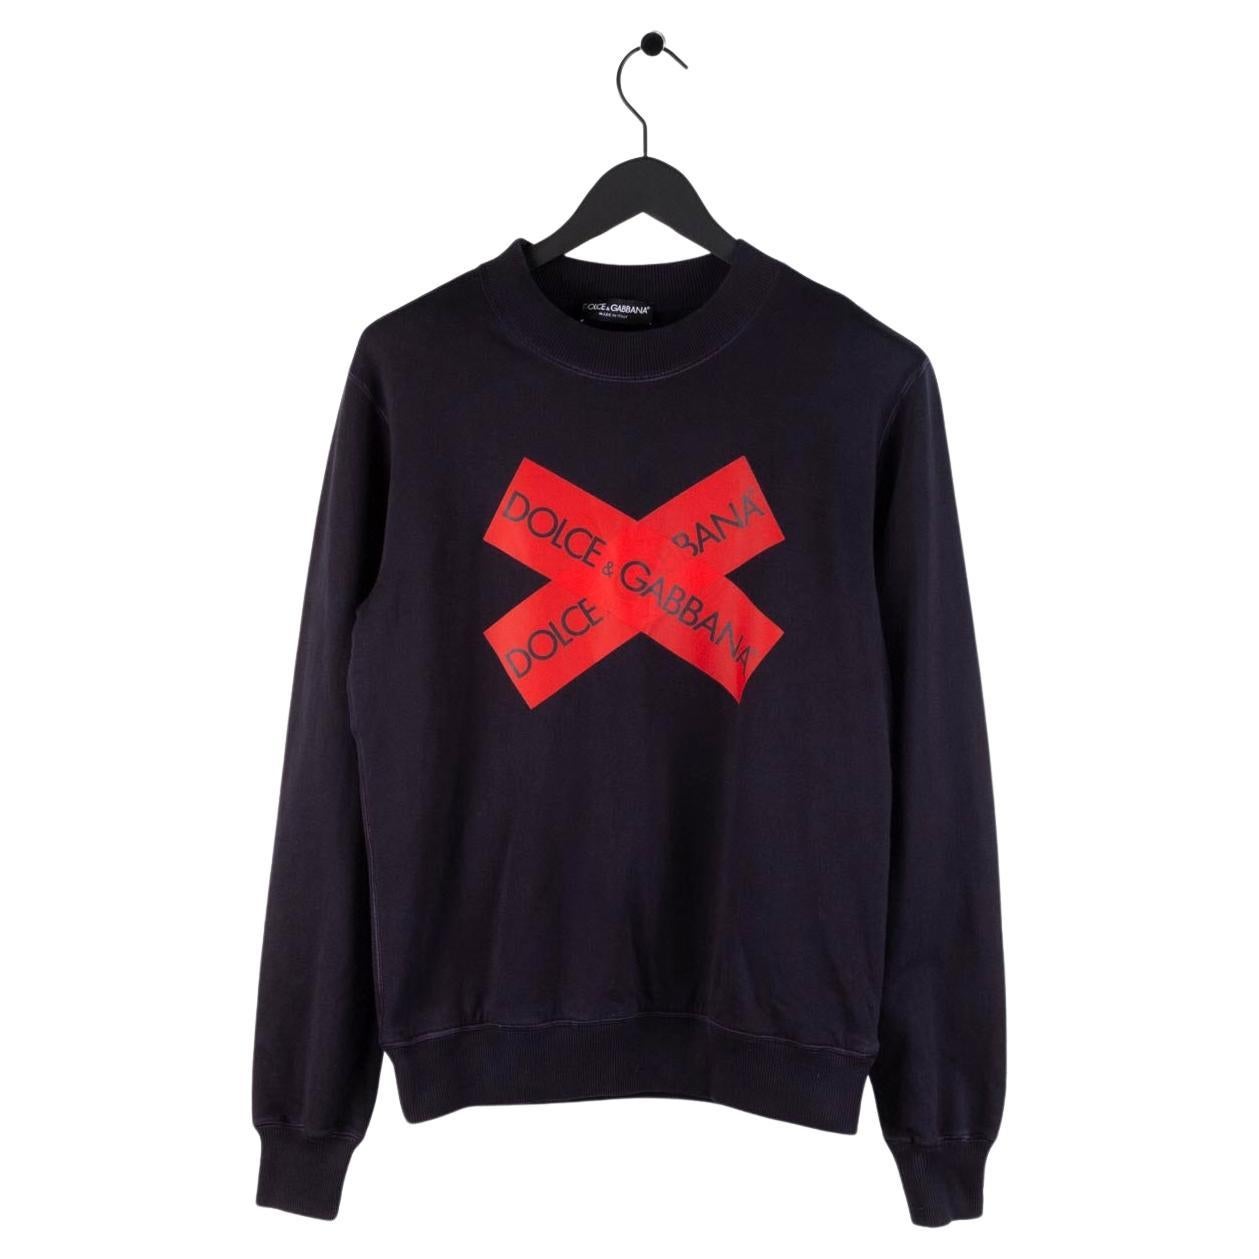 New Dolce&Gabbana Men Sweatshirt Jumper Pullover Red Cross, Size 46IT (S/M) S444